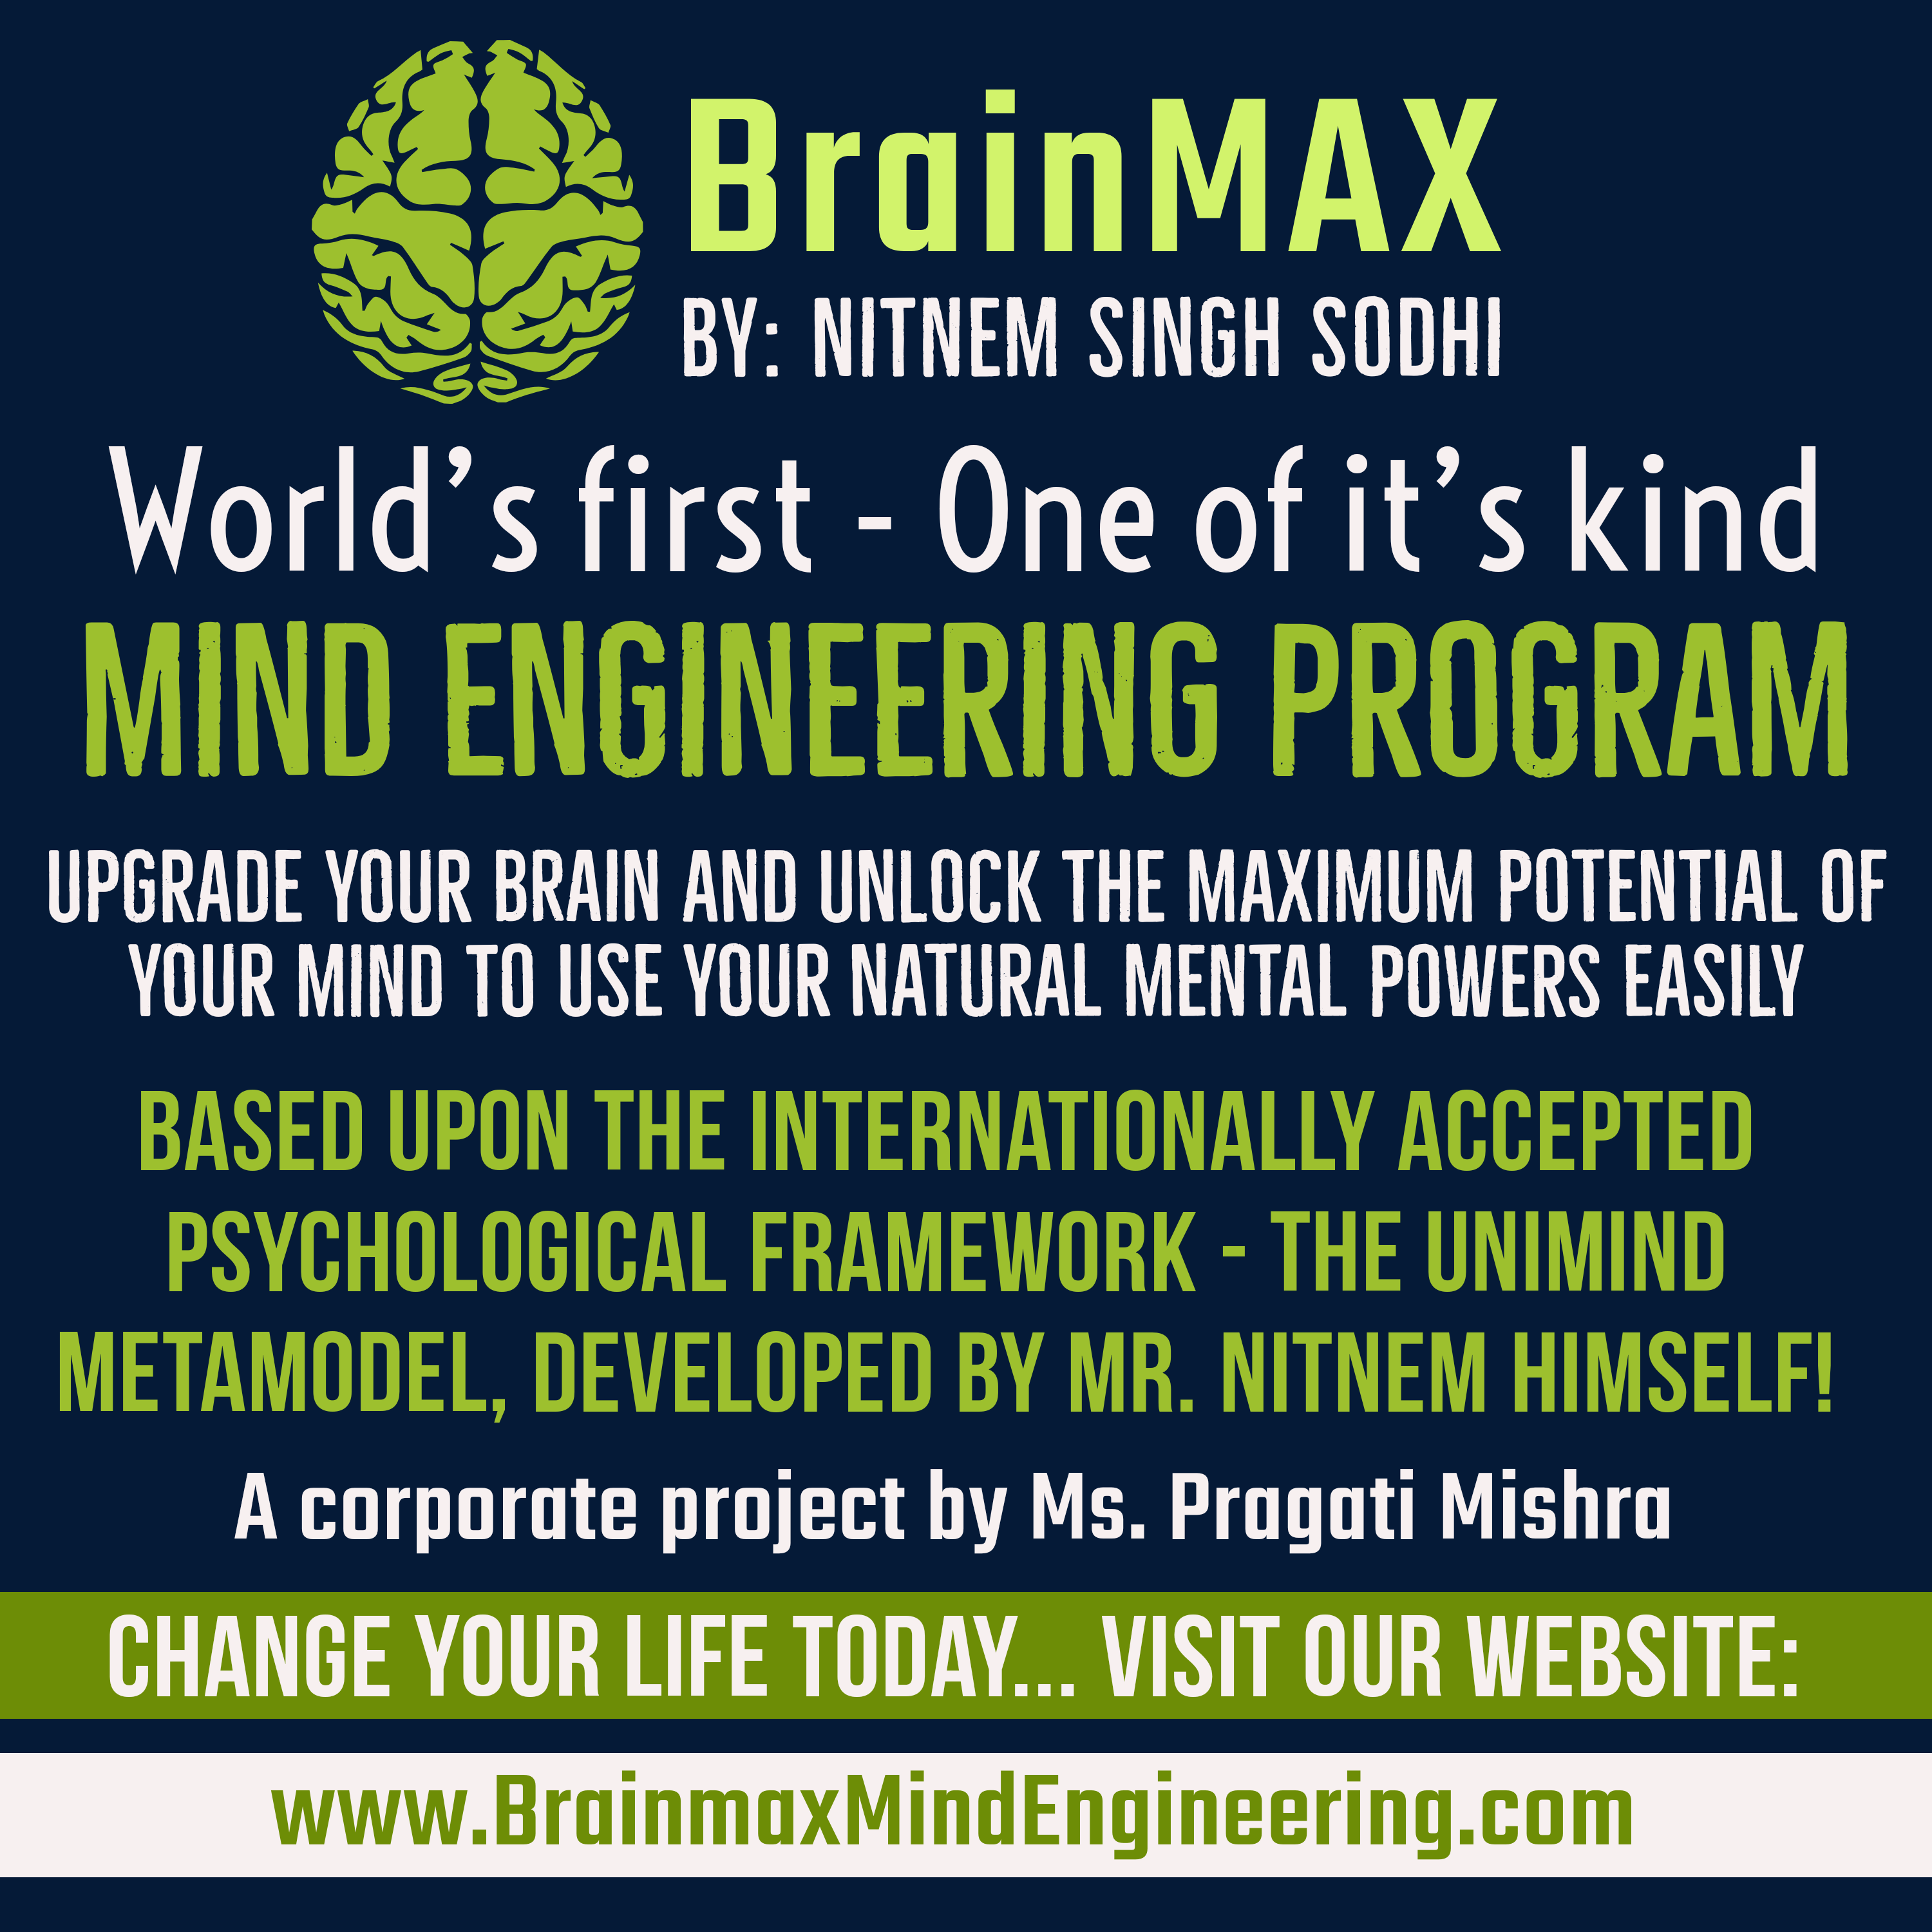 BrainMAX Mind Engineering Program